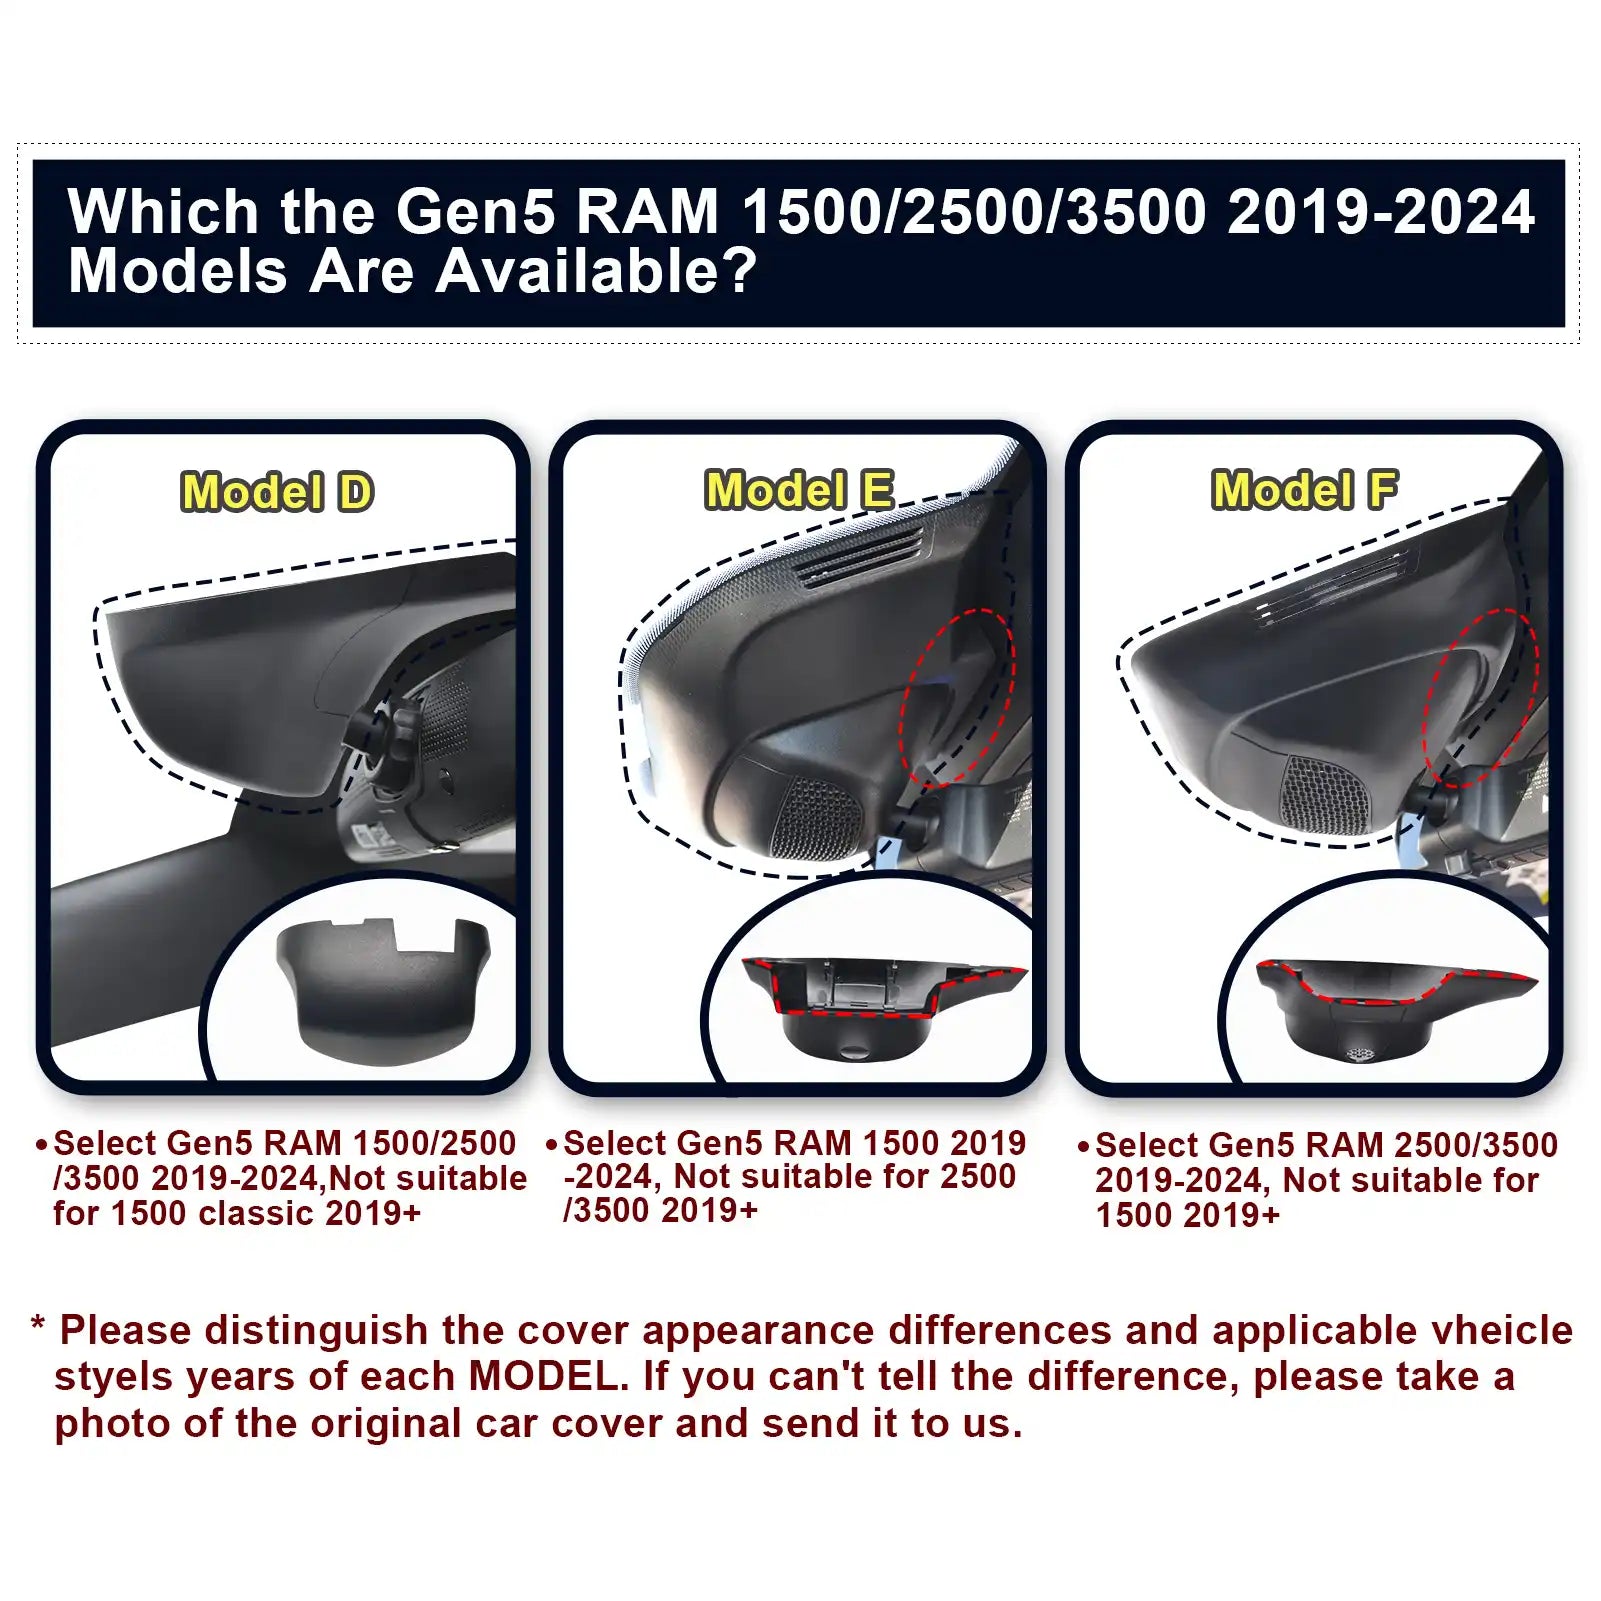 Mangoal 4K Dash Cam Custom fit for 4th Gen Dodge RAM 1500/2500/3500 2013 2014 2015 2016 2017 2018, 1500 Classic 2019-2022(Model A), DS/DJ/D2 Accessories, UHD 2160P Video, App & WiFi, 128GB Card